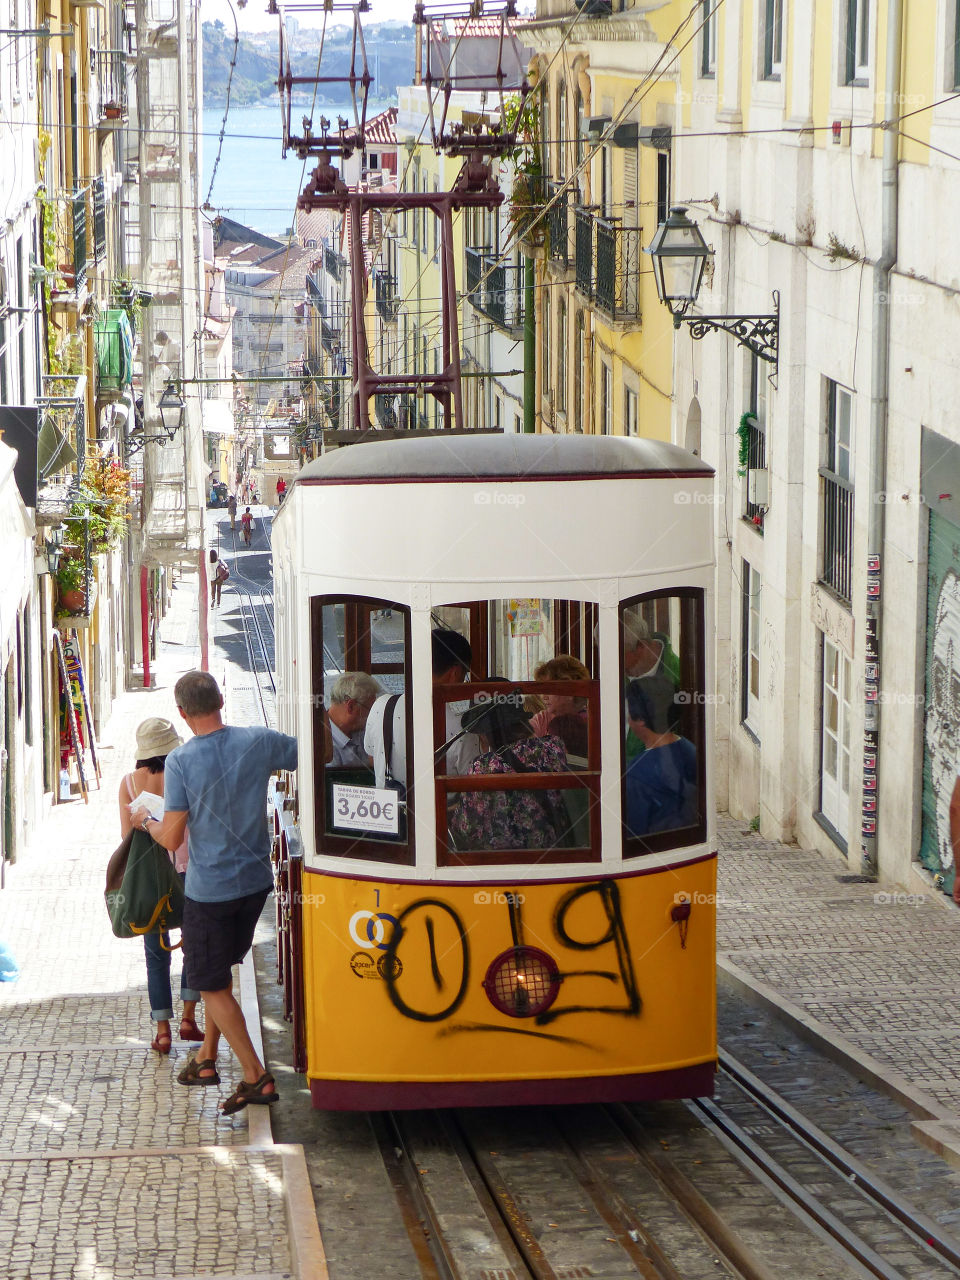 Lisbon tram. A Tram in Lisbon